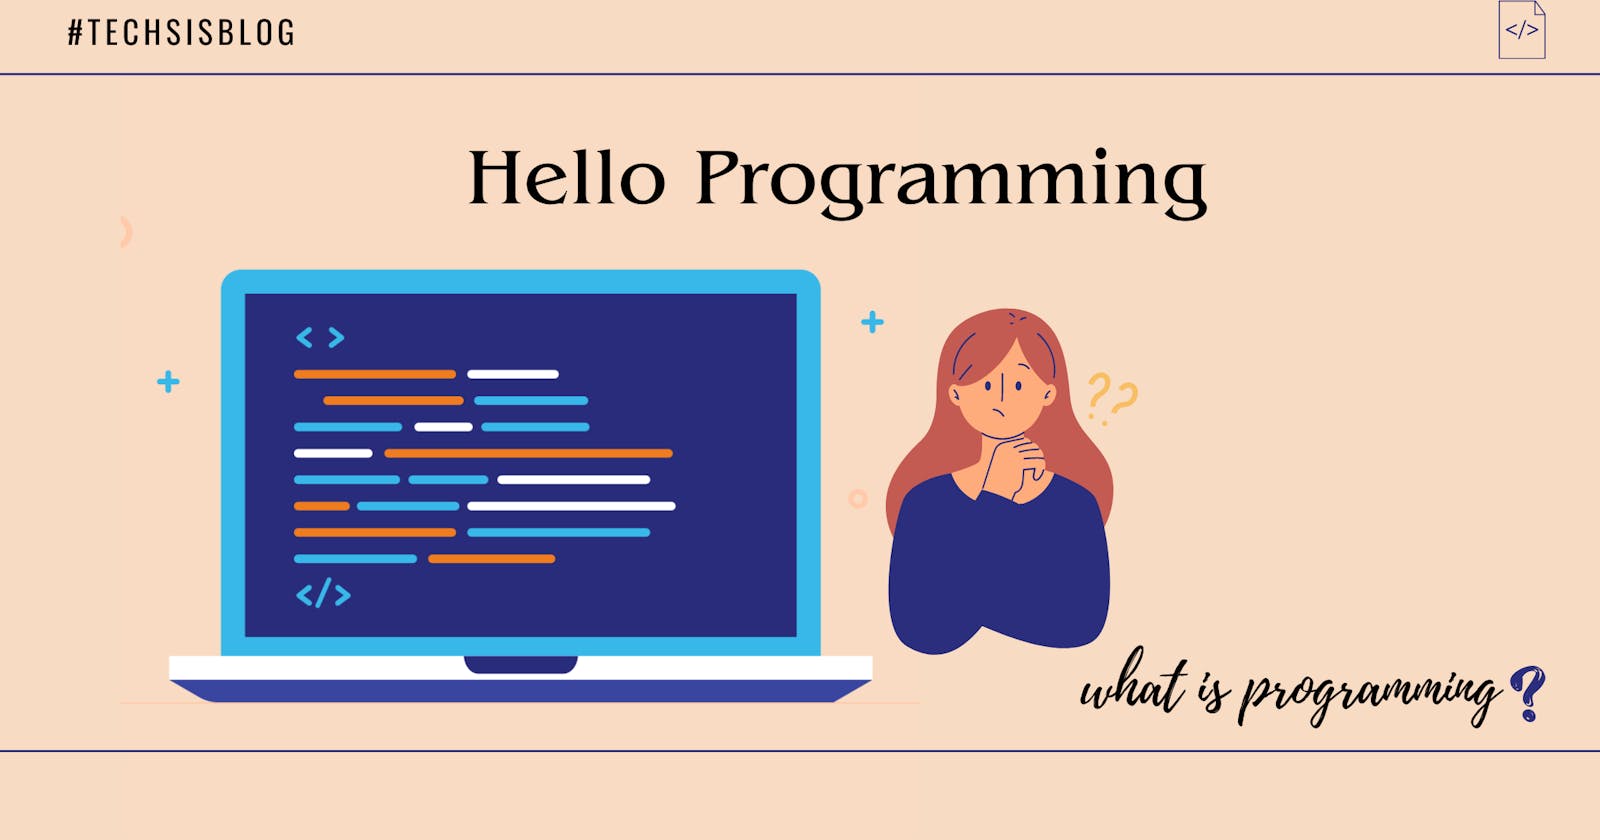 Hello Programming!